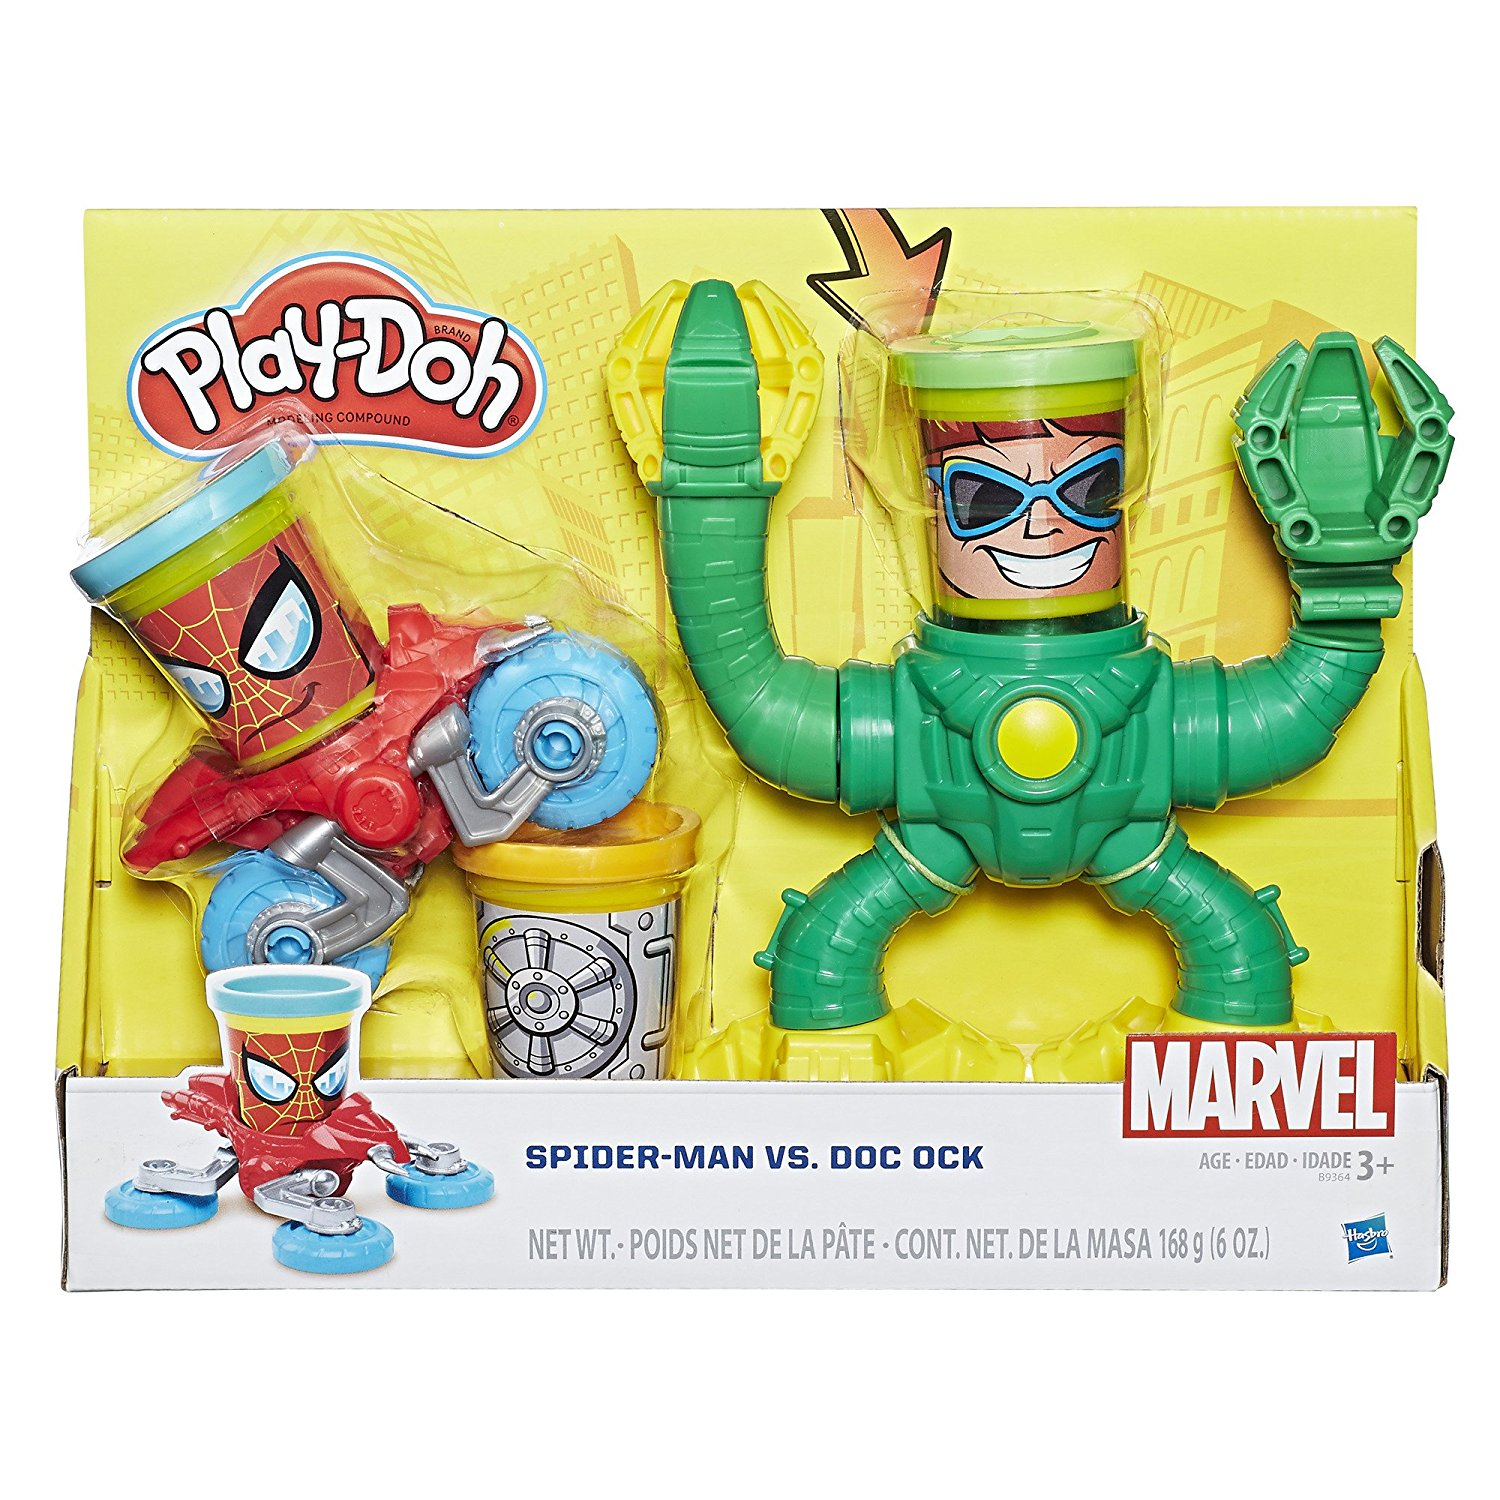 Play-Doh MVL Spiderman vs. Doc Ock Set Only $4.00! (Reg $14.99)